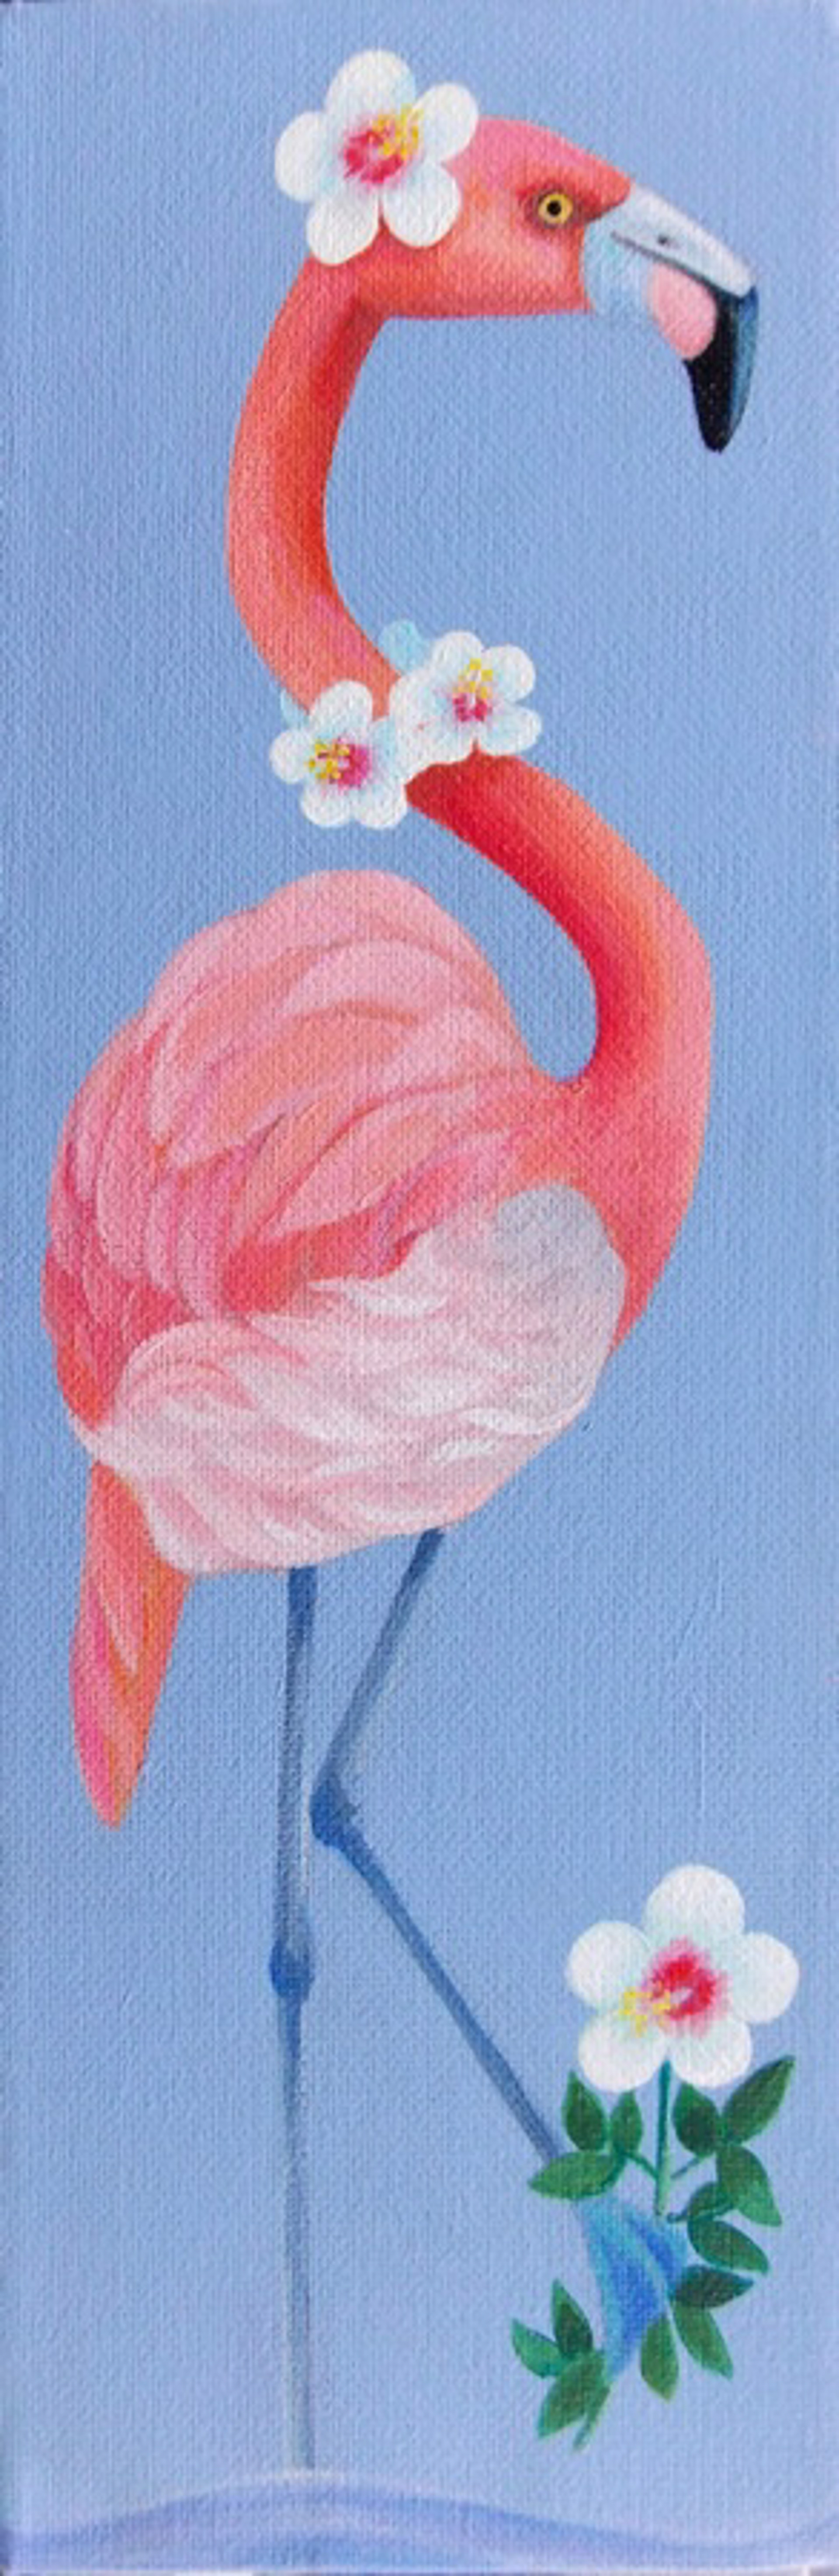 Flamingo White Hibiscus by Lisa Shimko